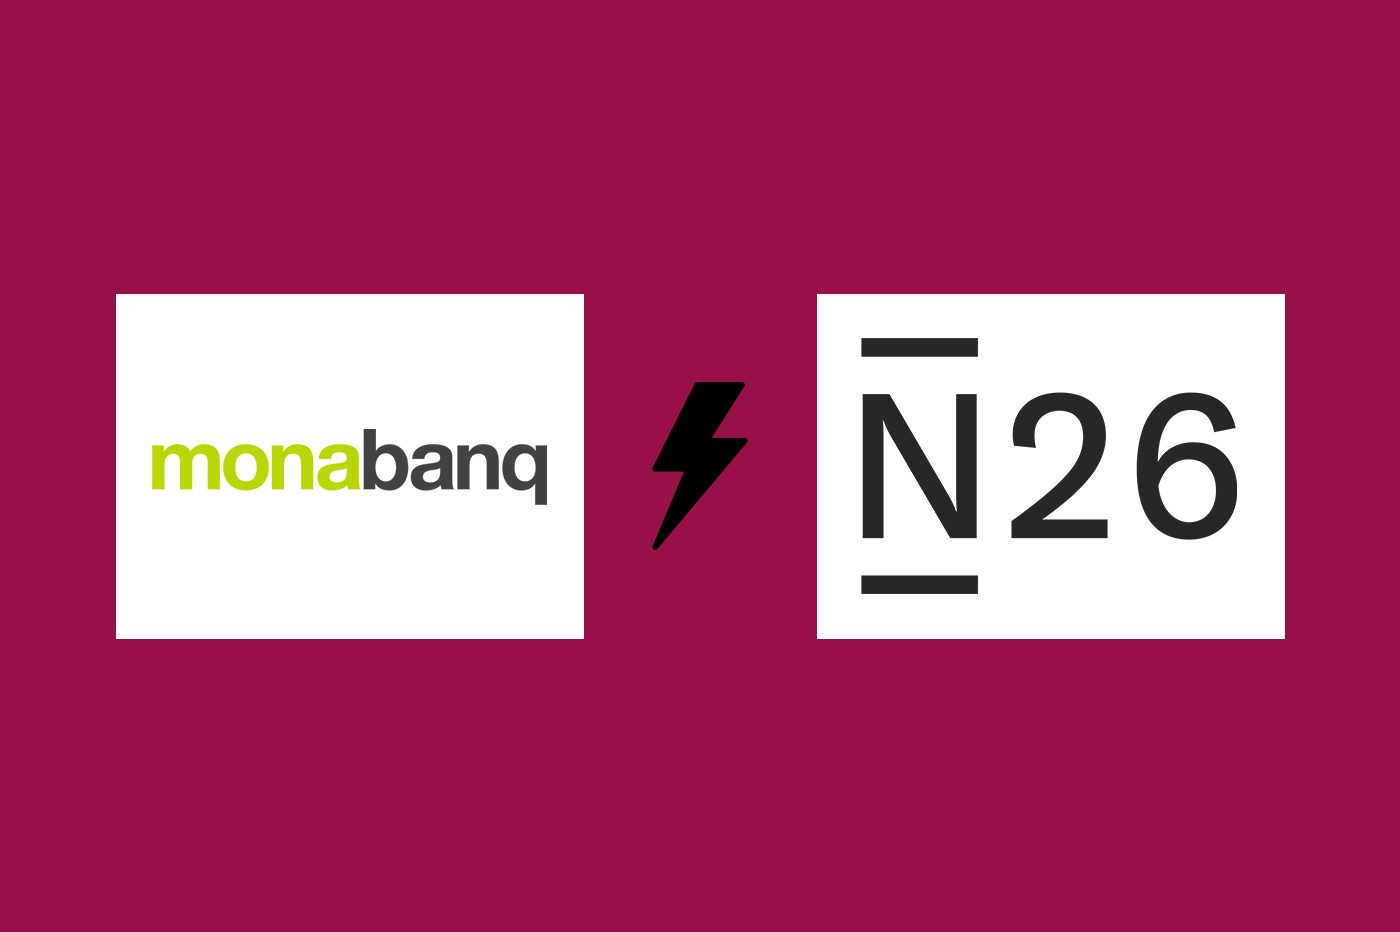 Monabanq vs N26